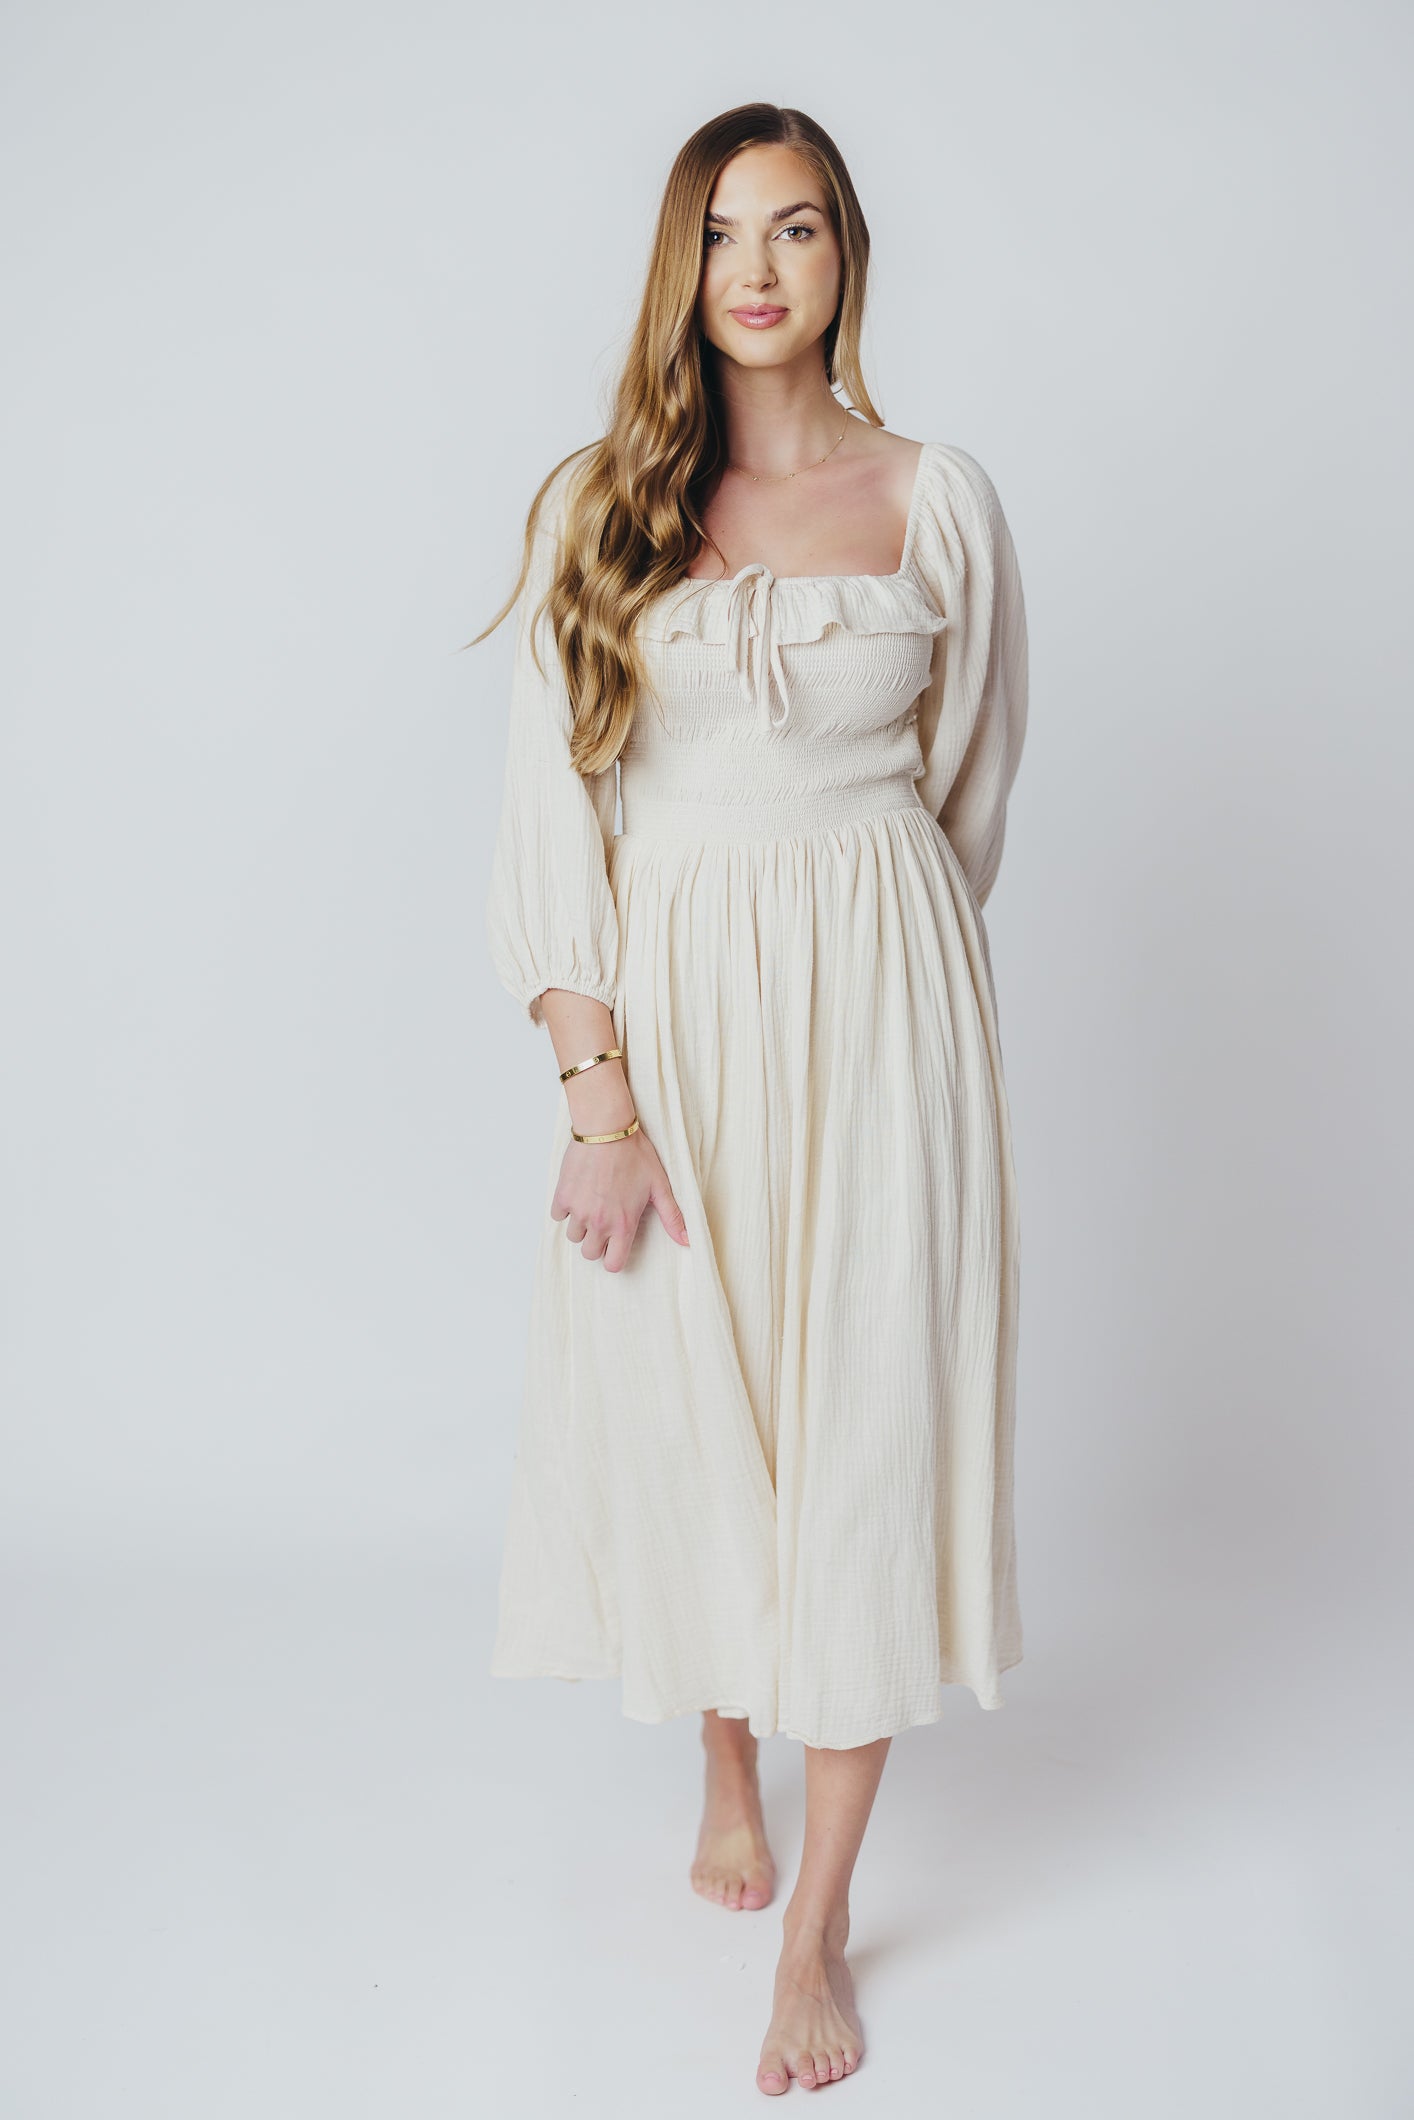 Juliet Midi Dress in Cream - Inclusive Sizing (S-3XL)